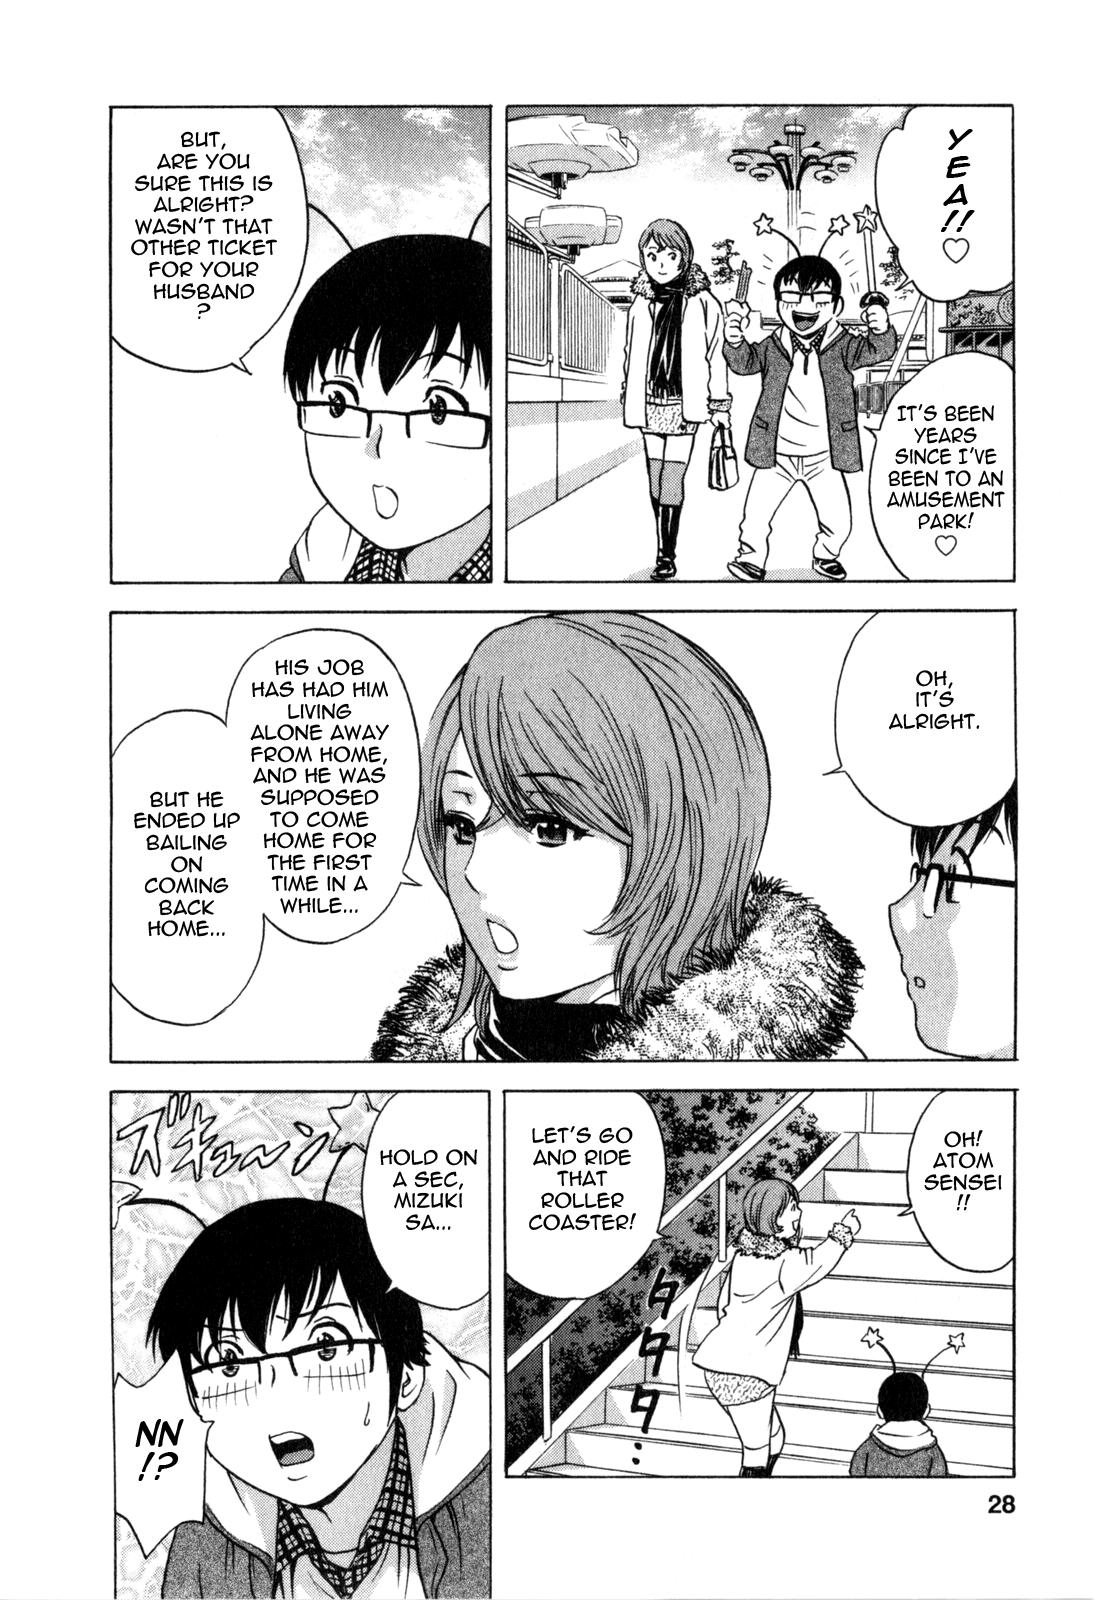 [Hidemaru] Life with Married Women Just Like a Manga 3 - Ch. 1-2 [English] {Tadanohito} 30